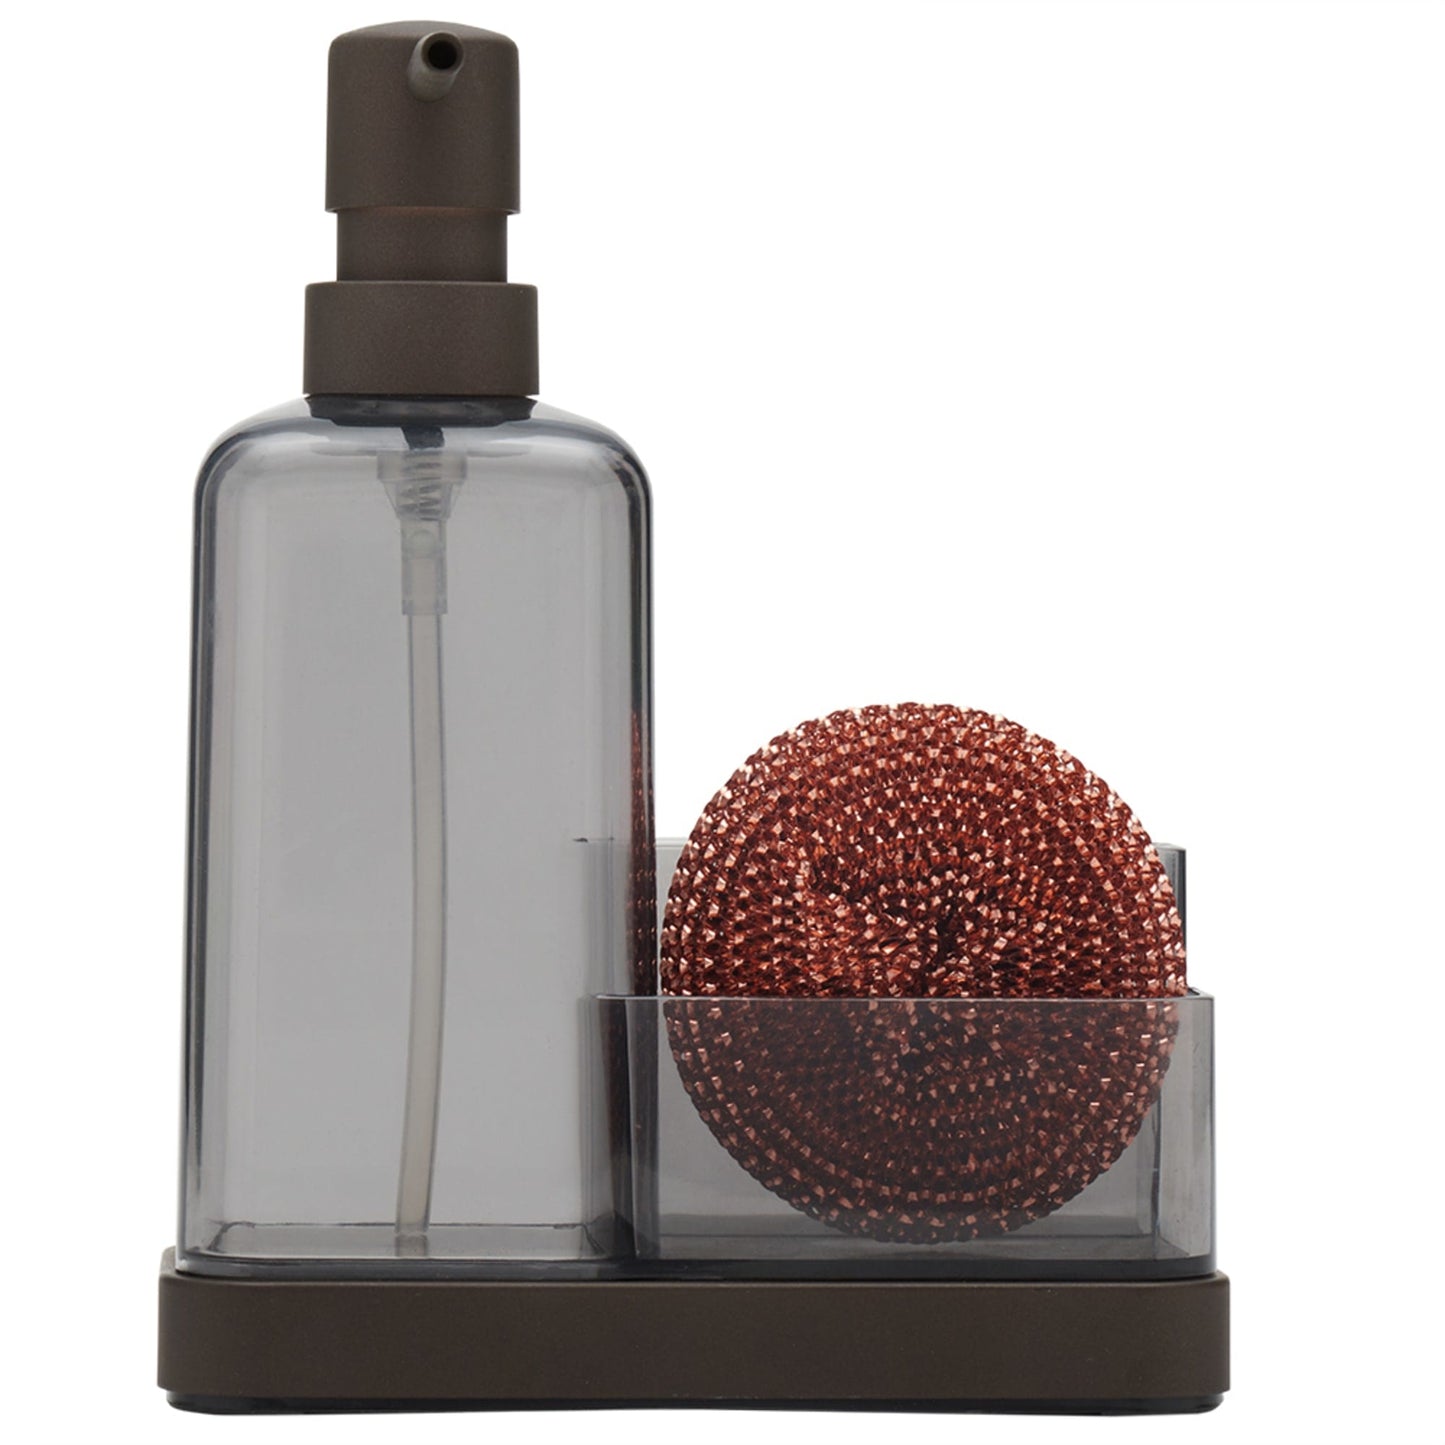 13.5 oz. Plastic Soap Dispenser with Sponge Compartment, Bronze